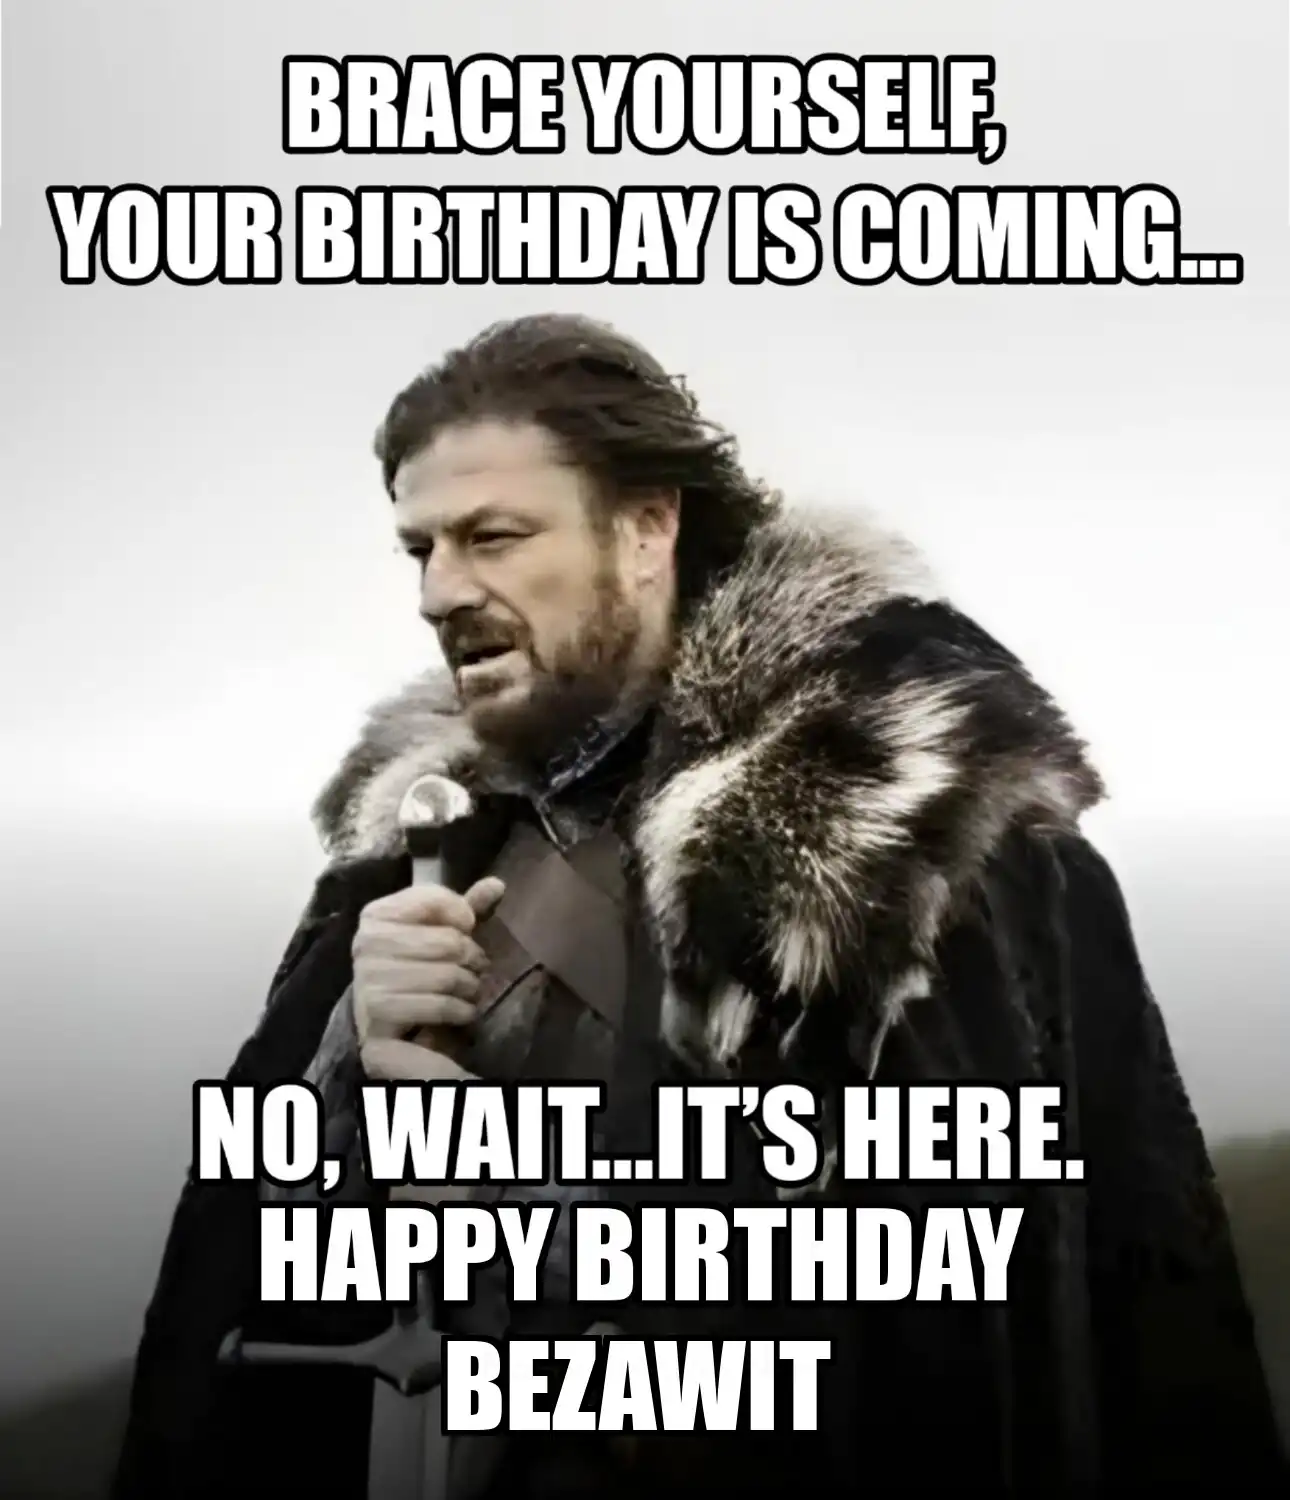 Happy Birthday Bezawit Brace Yourself Your Birthday Is Coming Meme